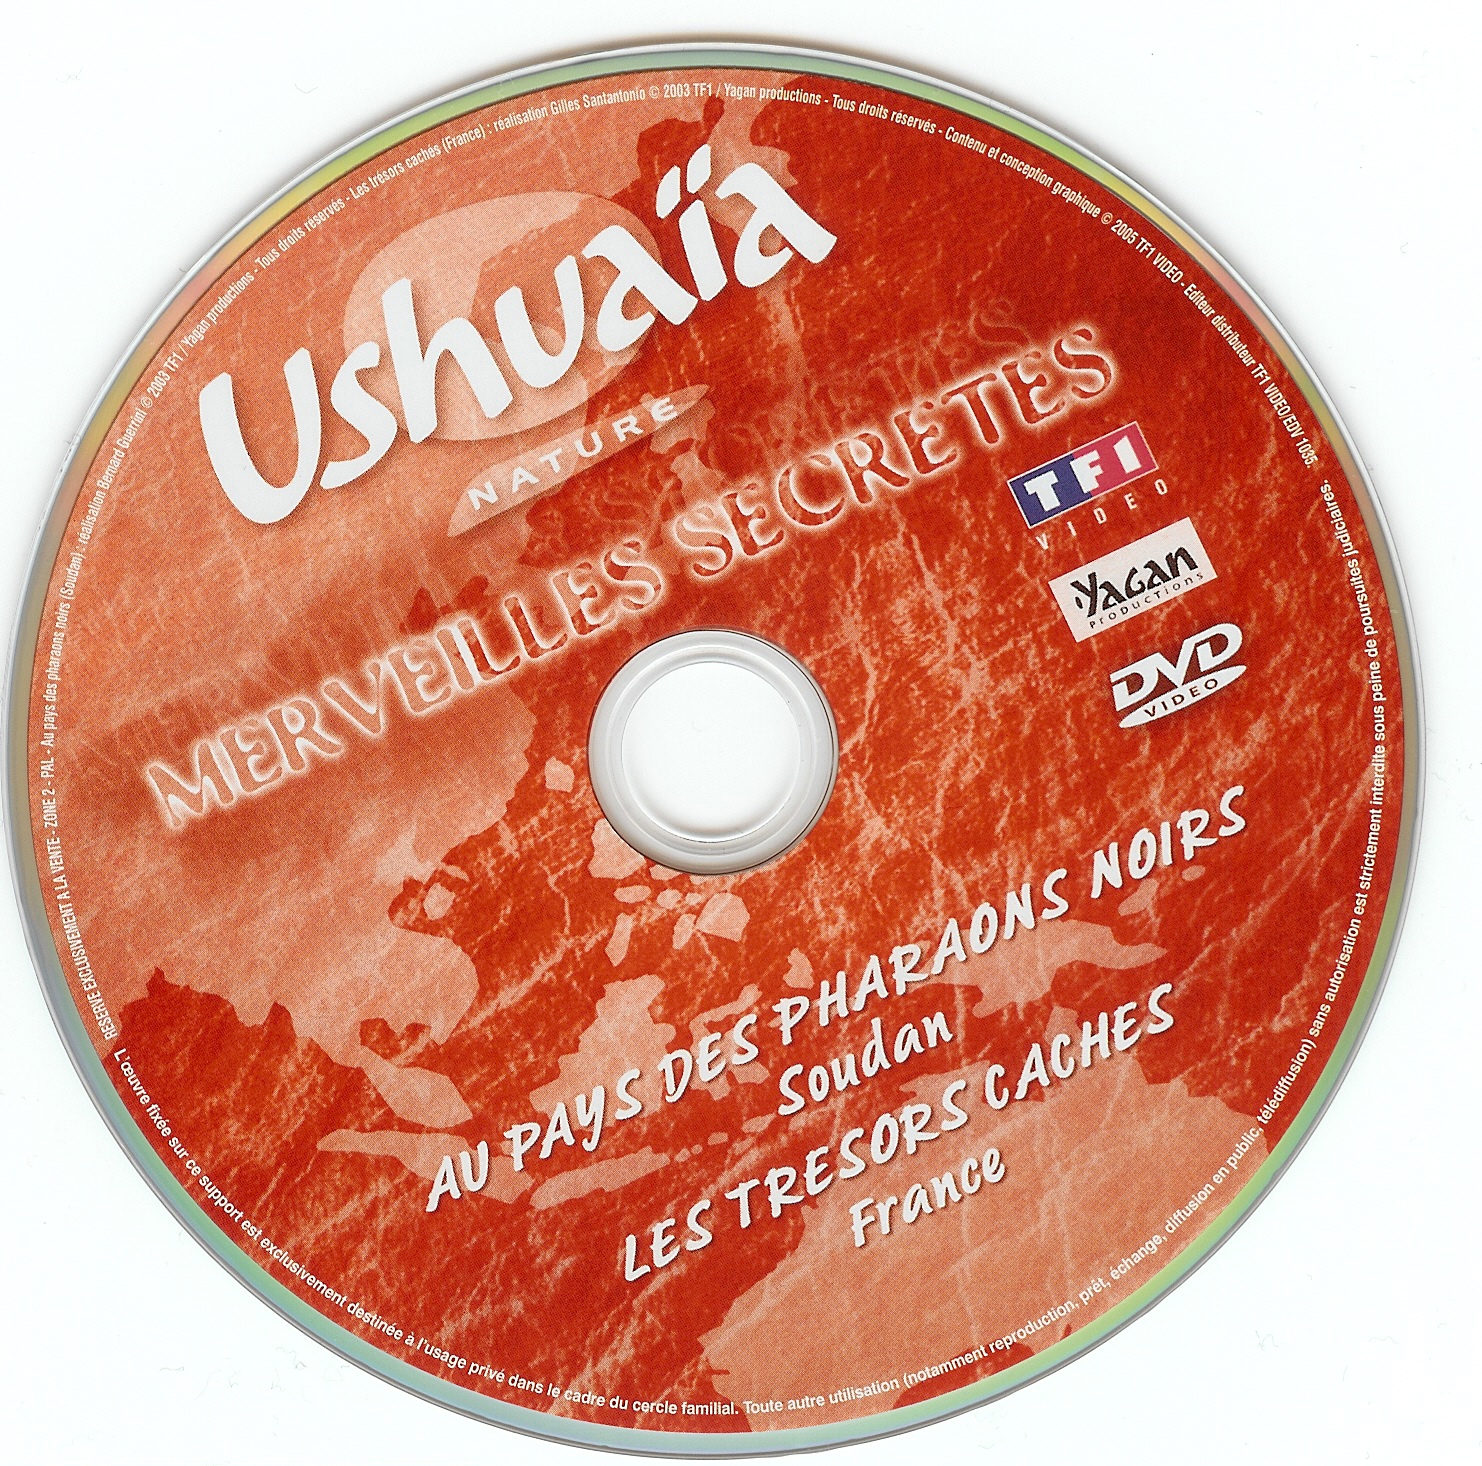 Ushuaia - merveilles secretes